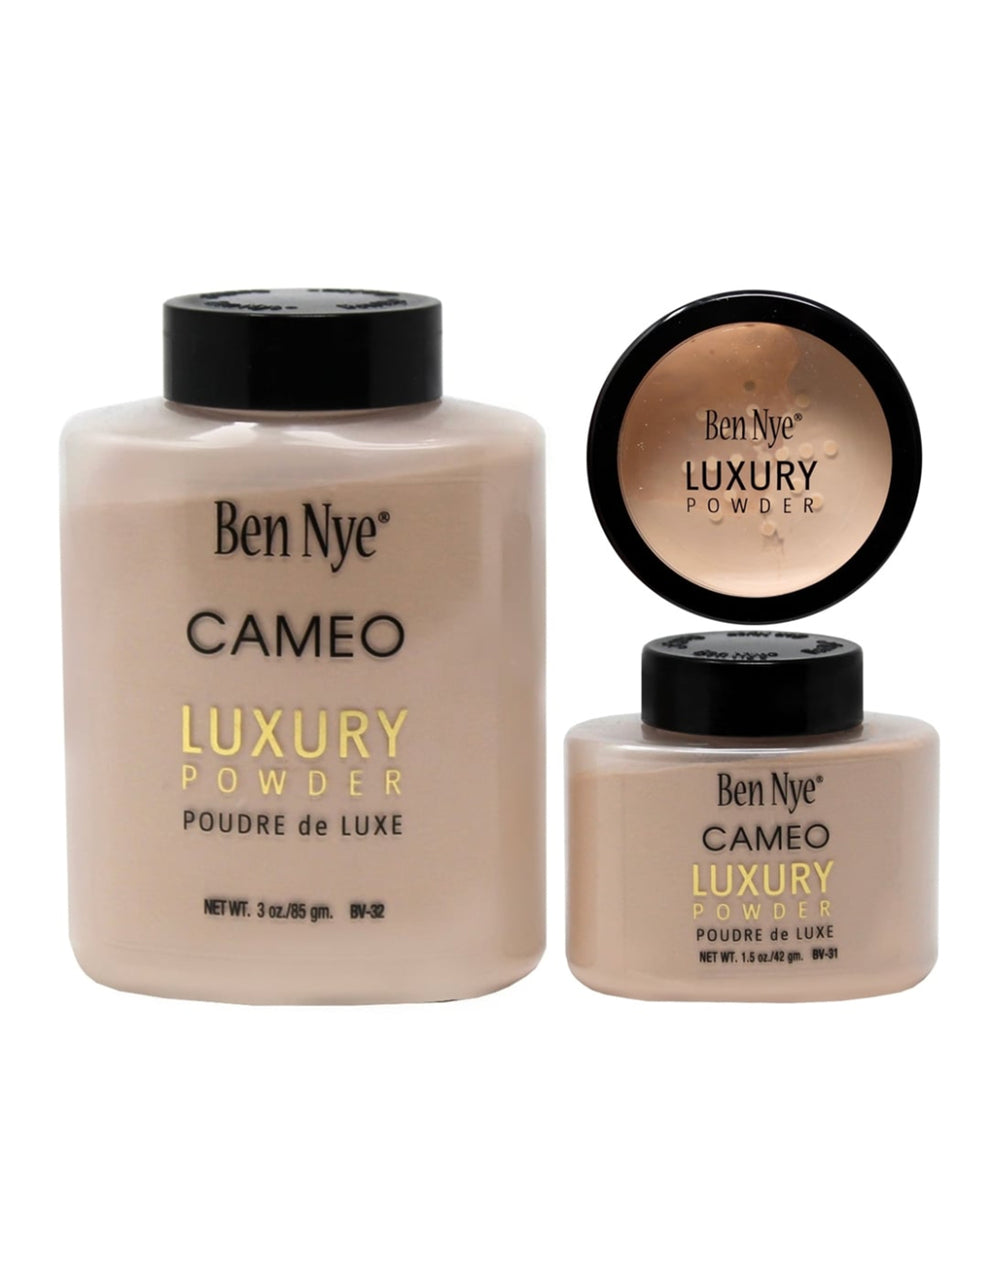 Ben Nye Clay Luxury Powder net wt. 3 oz